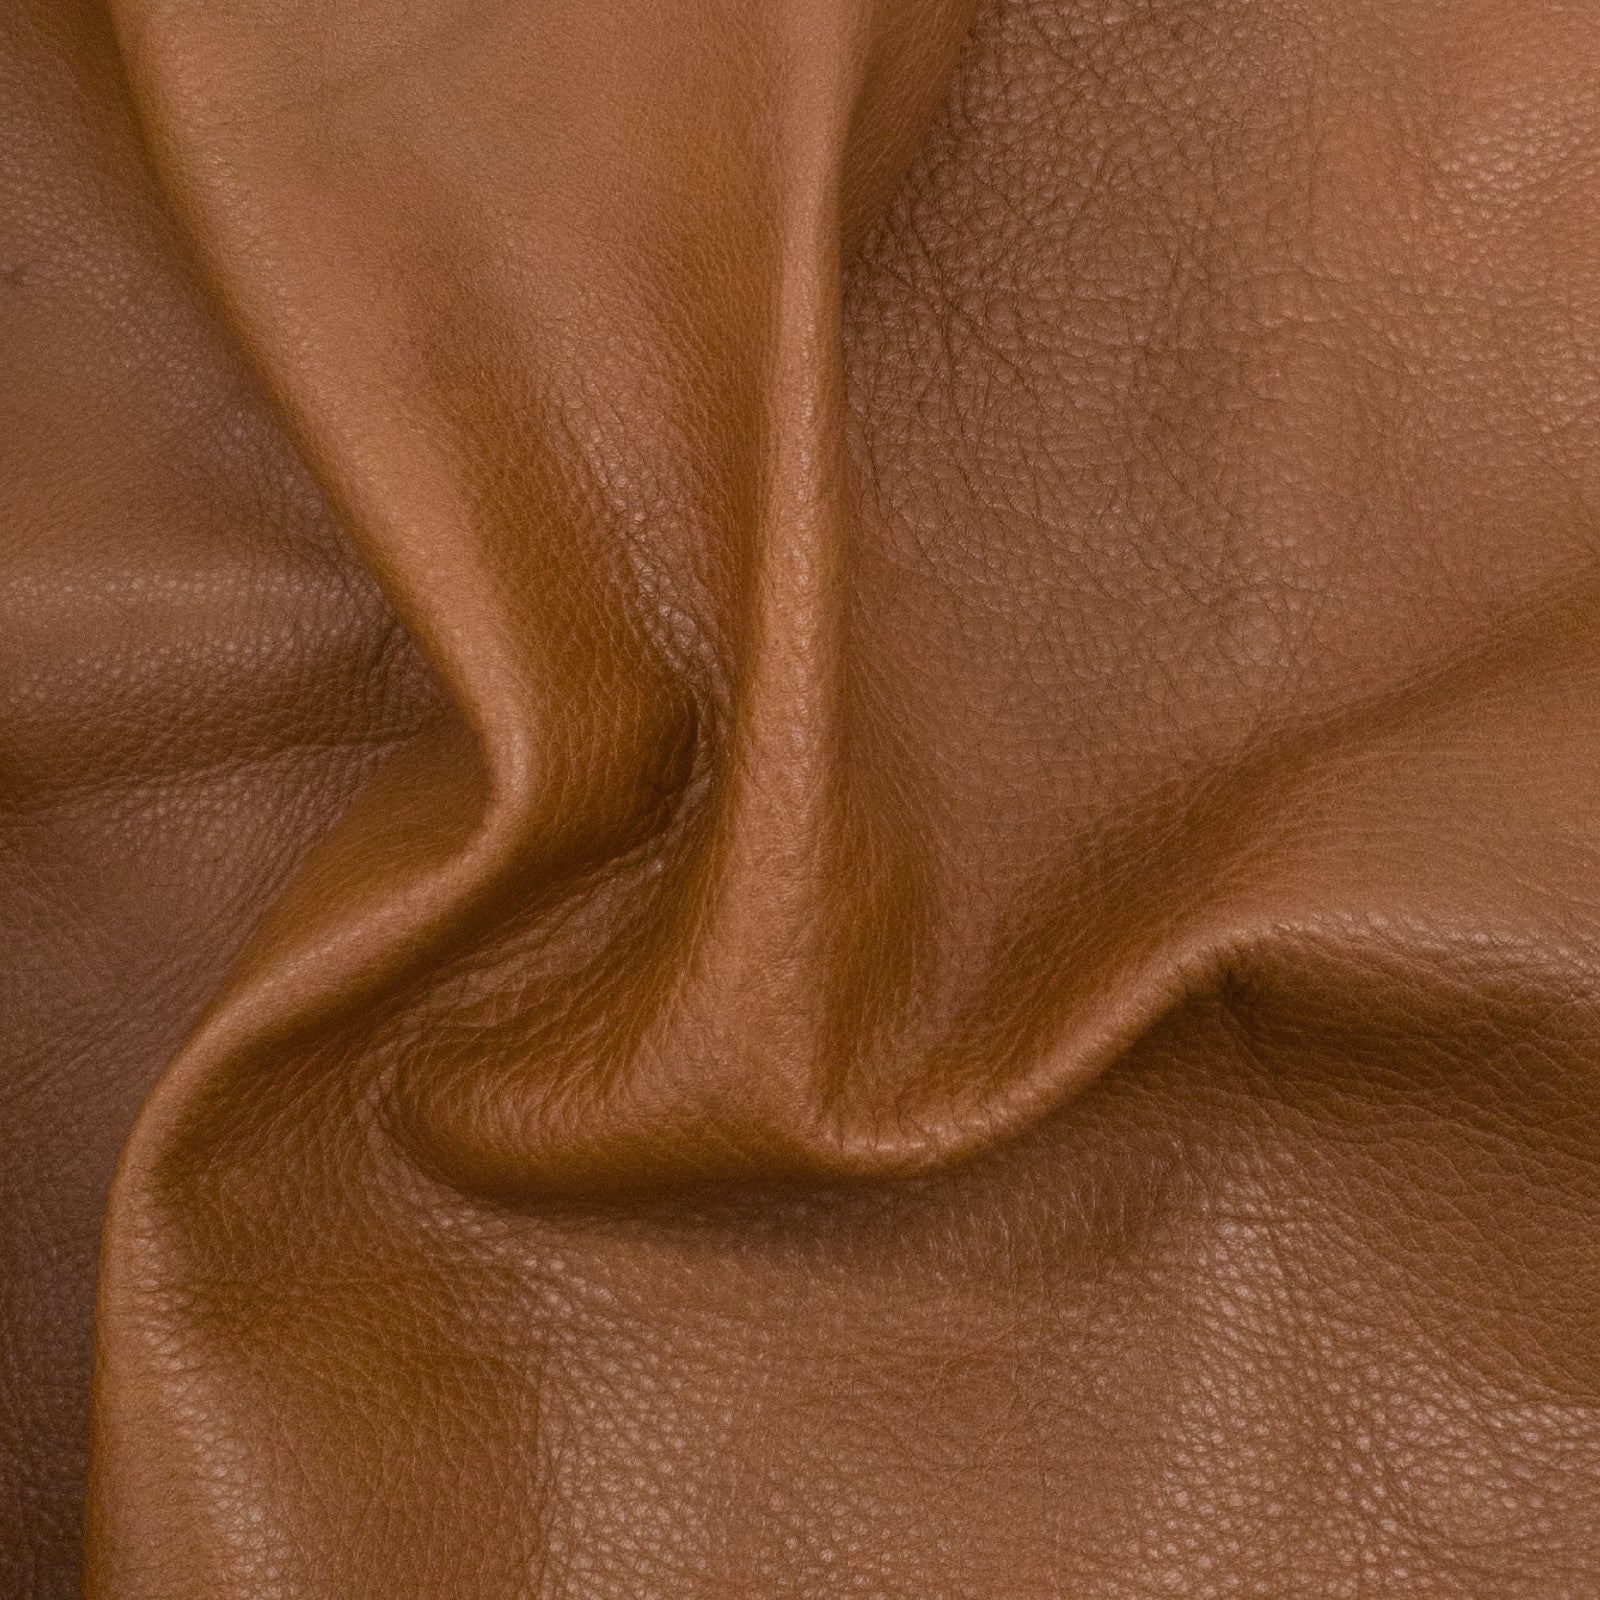 Light-Medium Brown, 2-4 oz, 3-10 Sq Ft, Upholstery Cow Project Pieces, Medium Brown (2-3oz) / 7-10 Sq Ft | The Leather Guy